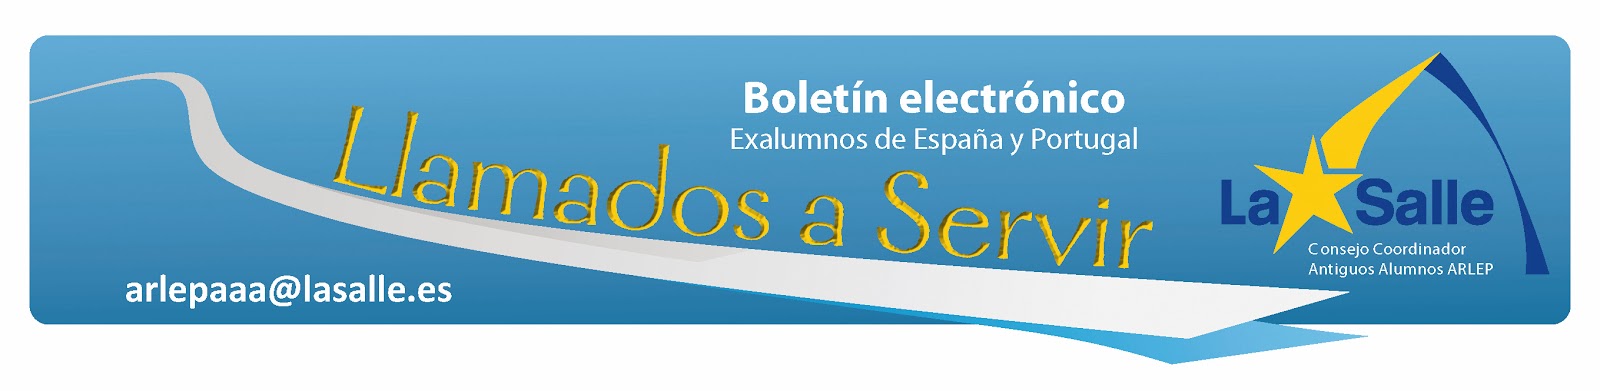 http://www.lasalle.es/aaa/docs_web/e-boletin/Boletin_21.pdf